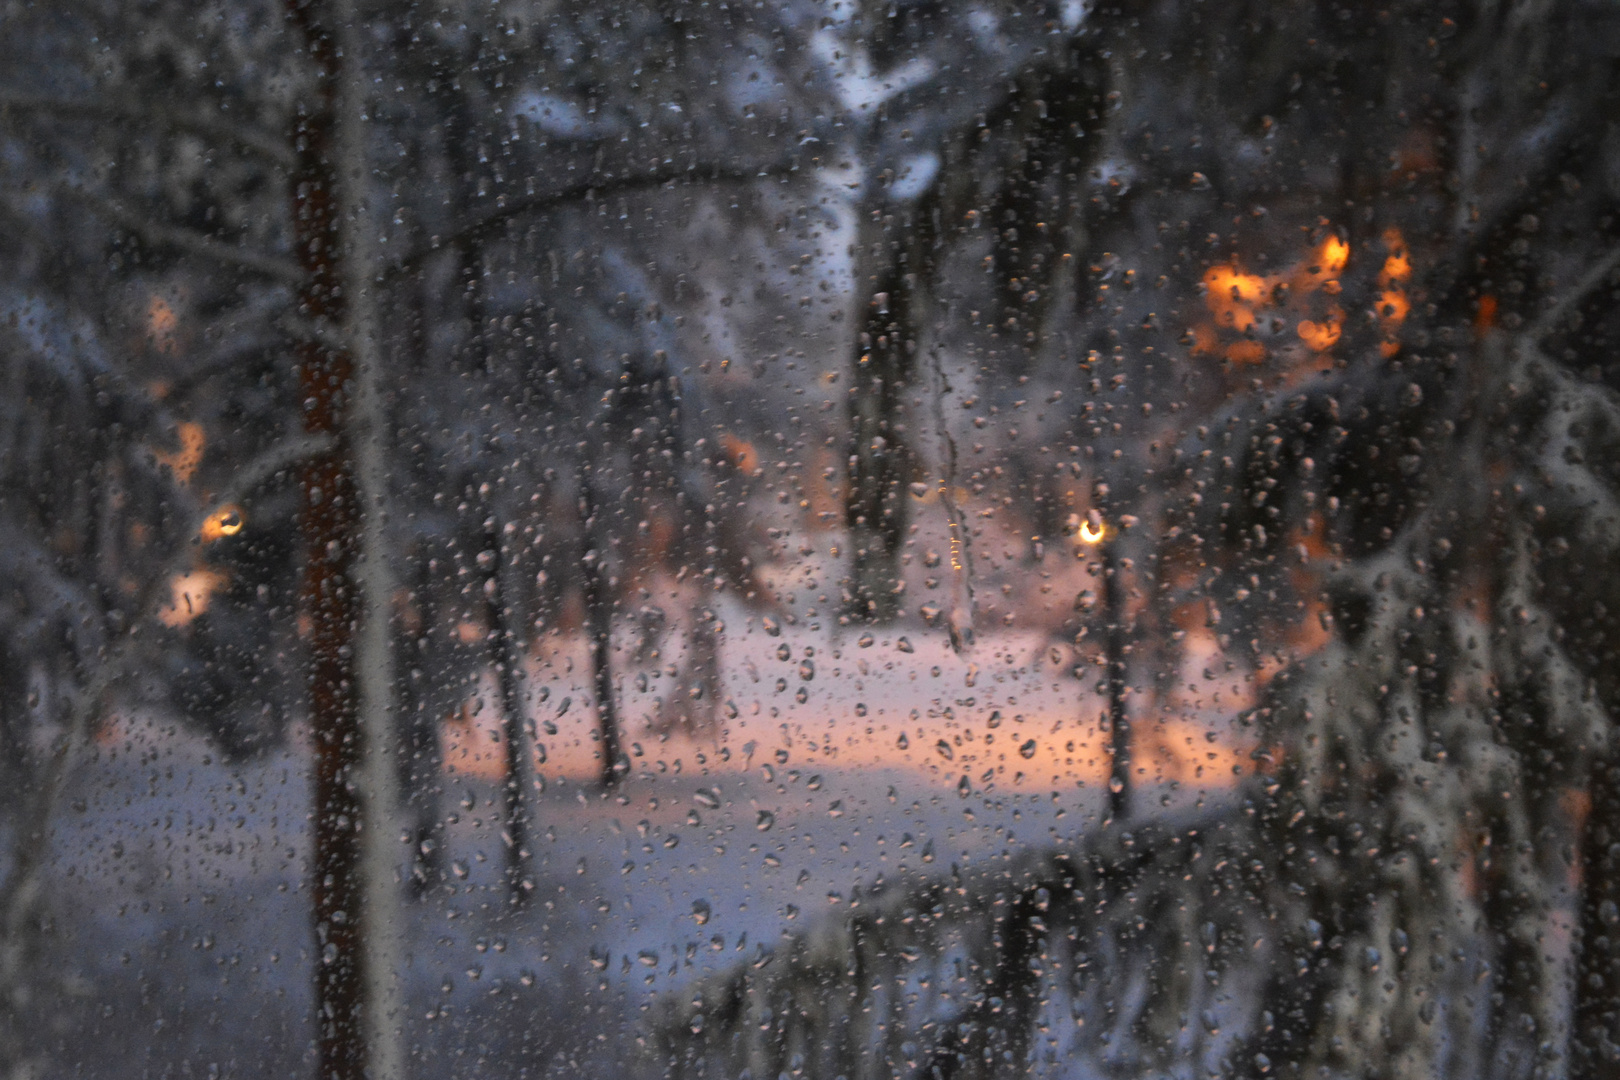 The wet window after snow rain